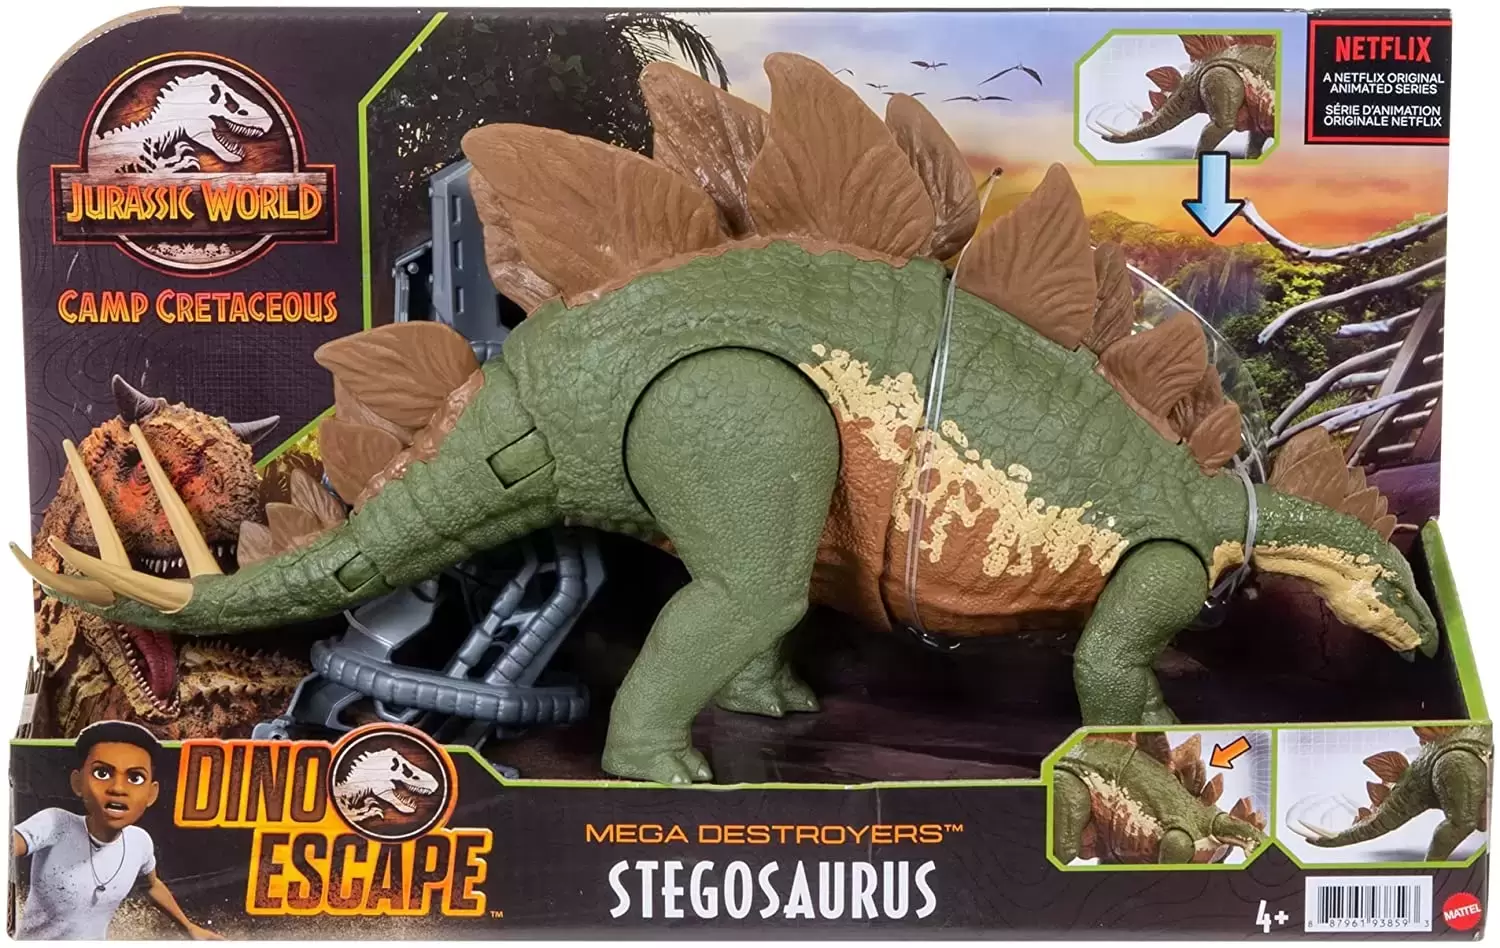 Jurassic World : Camp Cretaceous / Dino Escape - Stegosaurus - Mega Destroyers